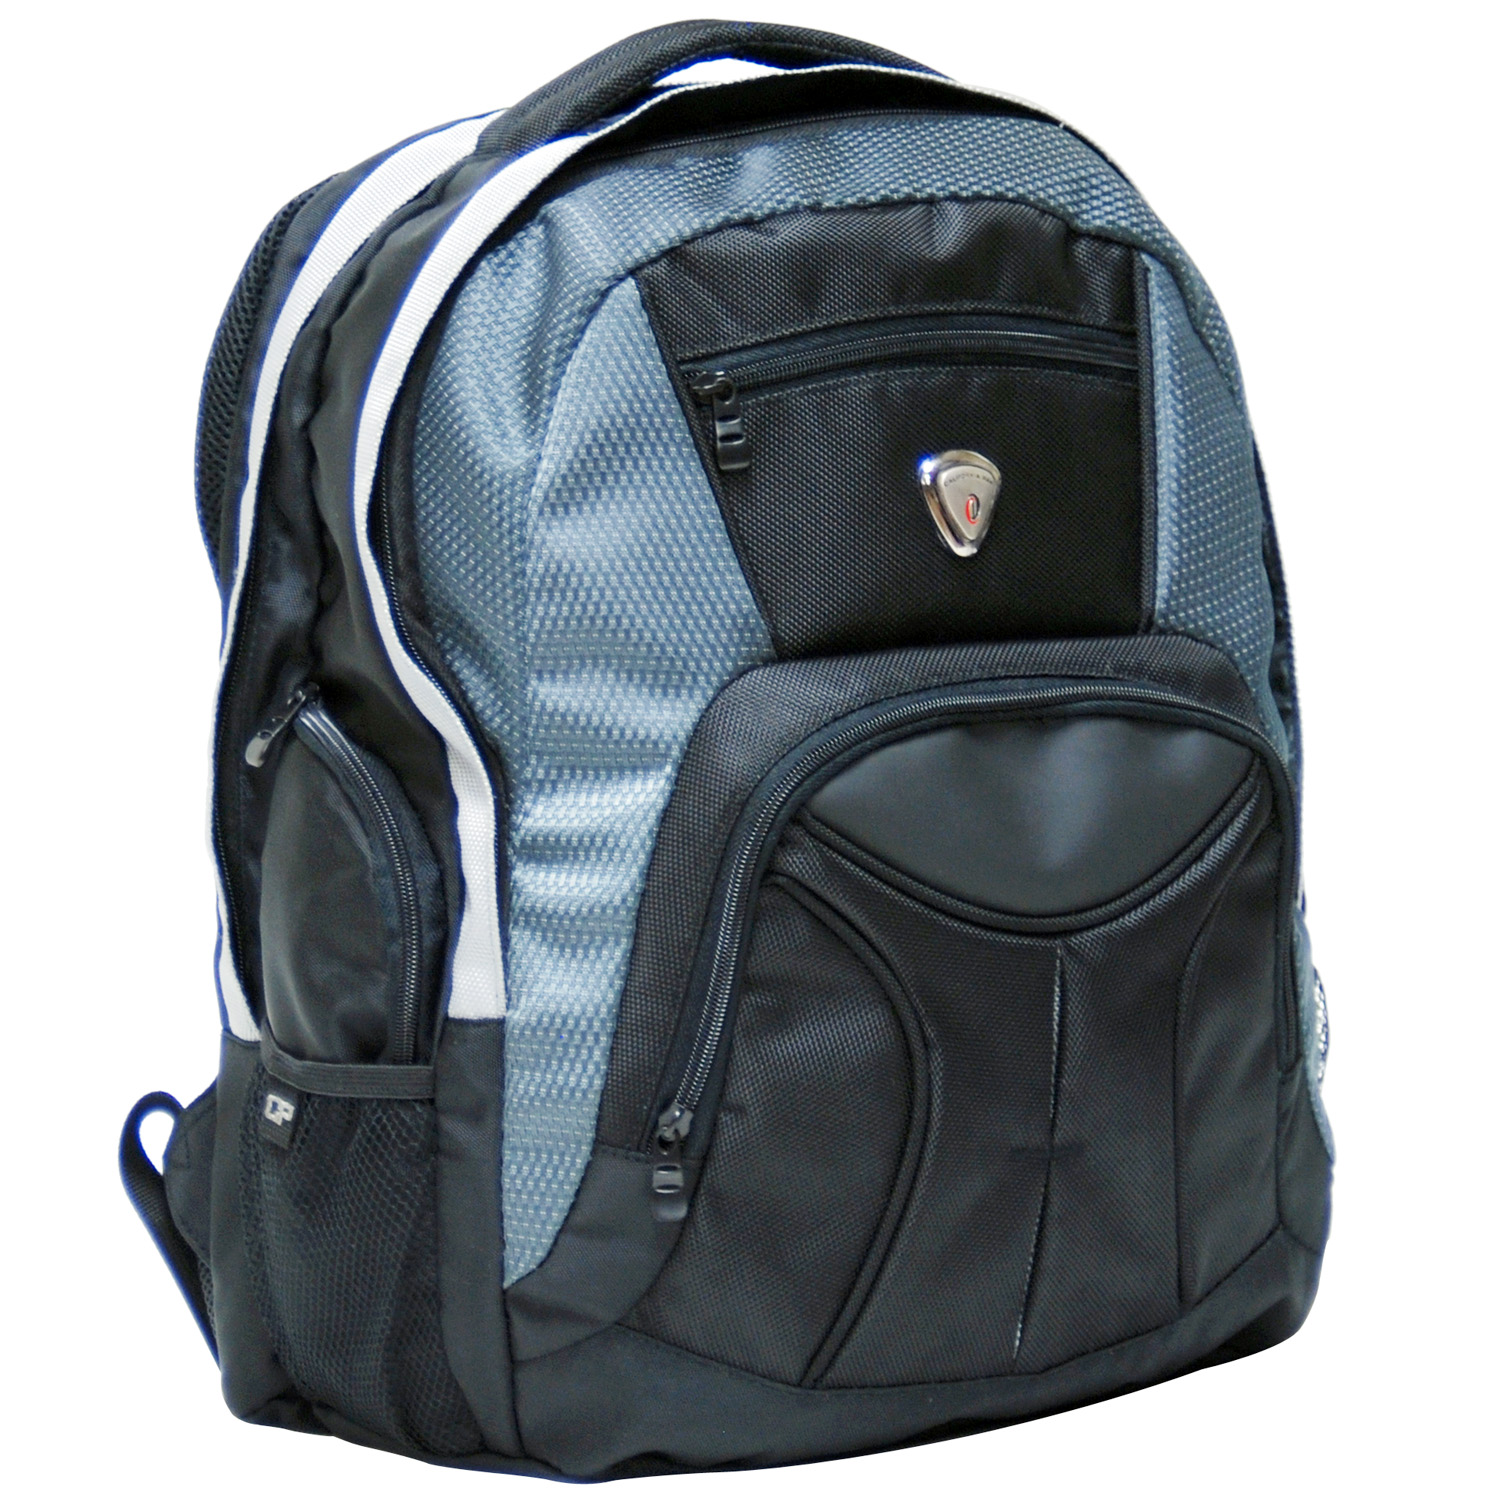 17" Deluxe Laptop Backpack (Mentor)